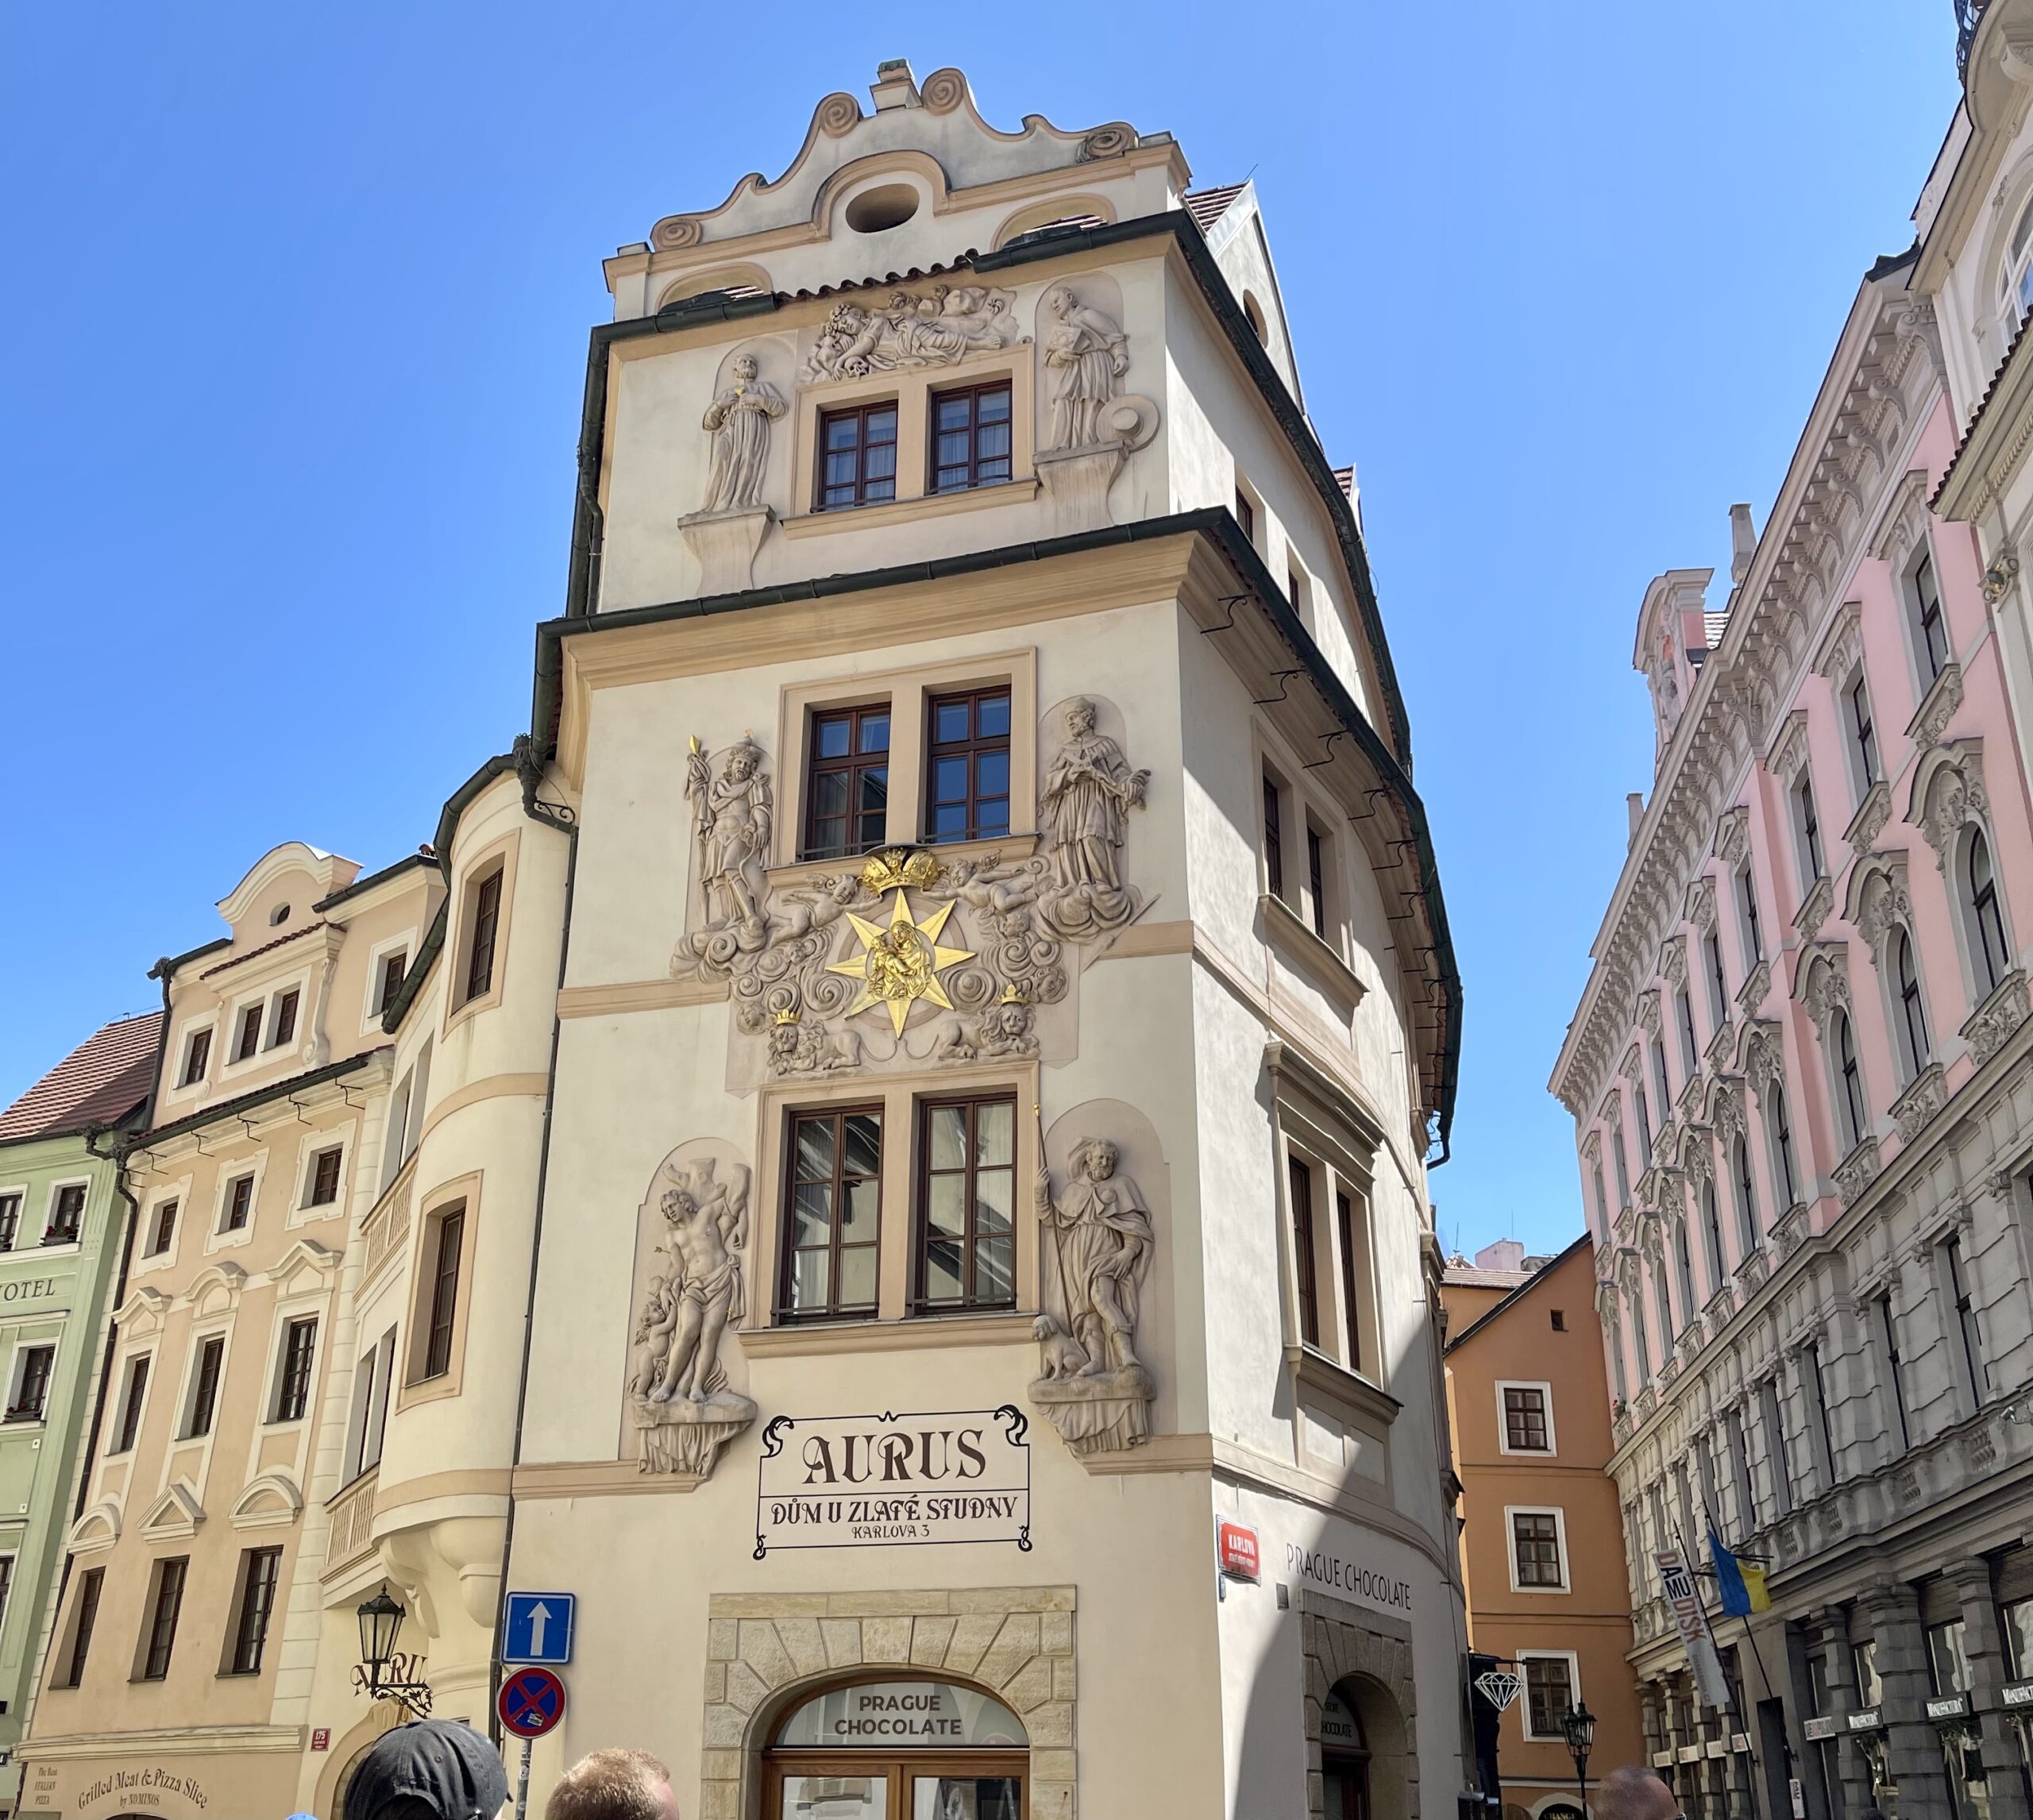 Beautiful old buildings in Old Town Prague